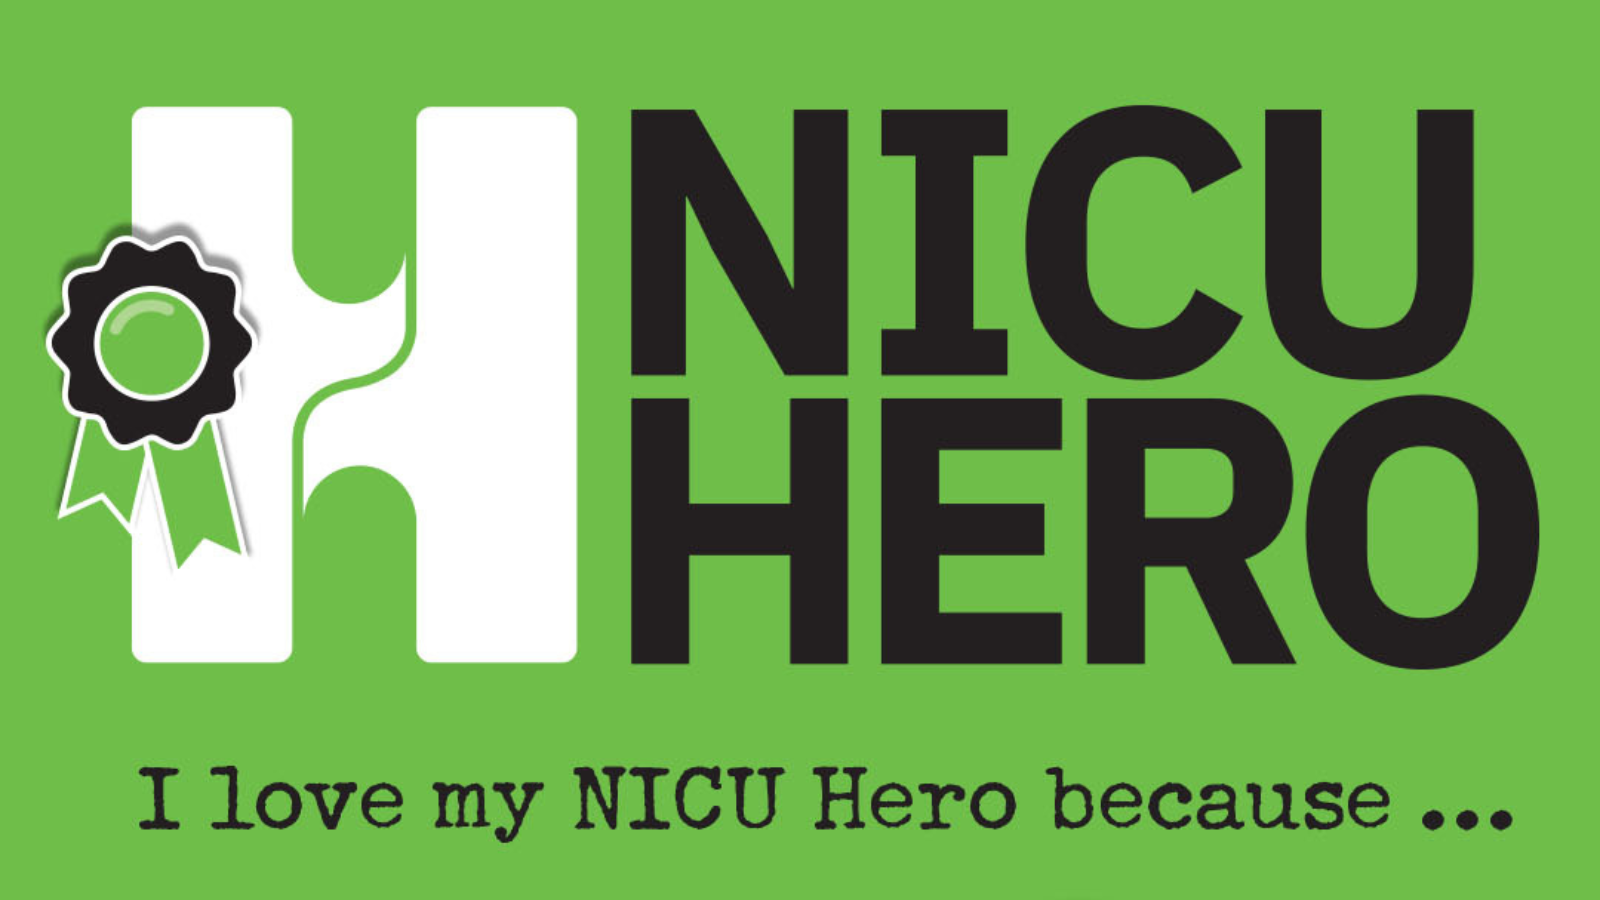 Hand to Hold NICU Hero Award Contest winners